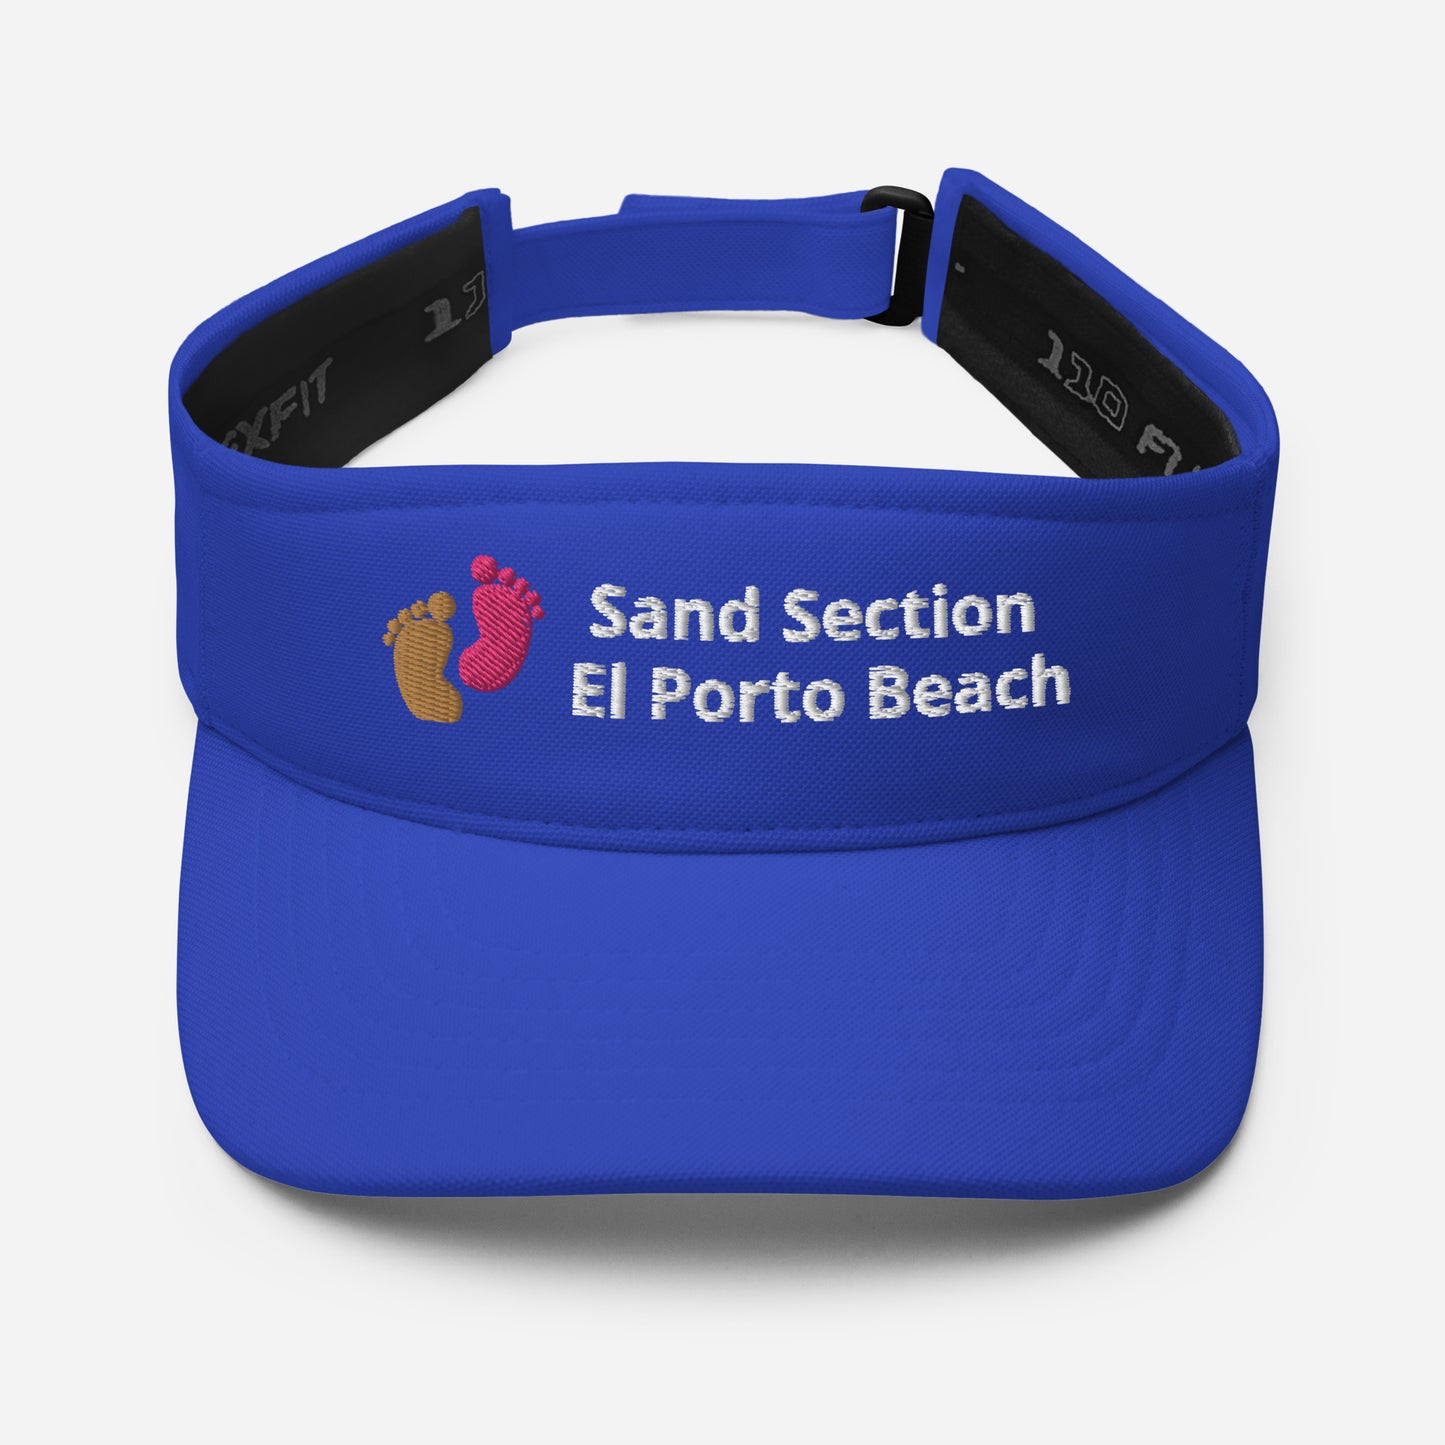 Sand Section El Porto Beach - Manhattan Beach - California Visor